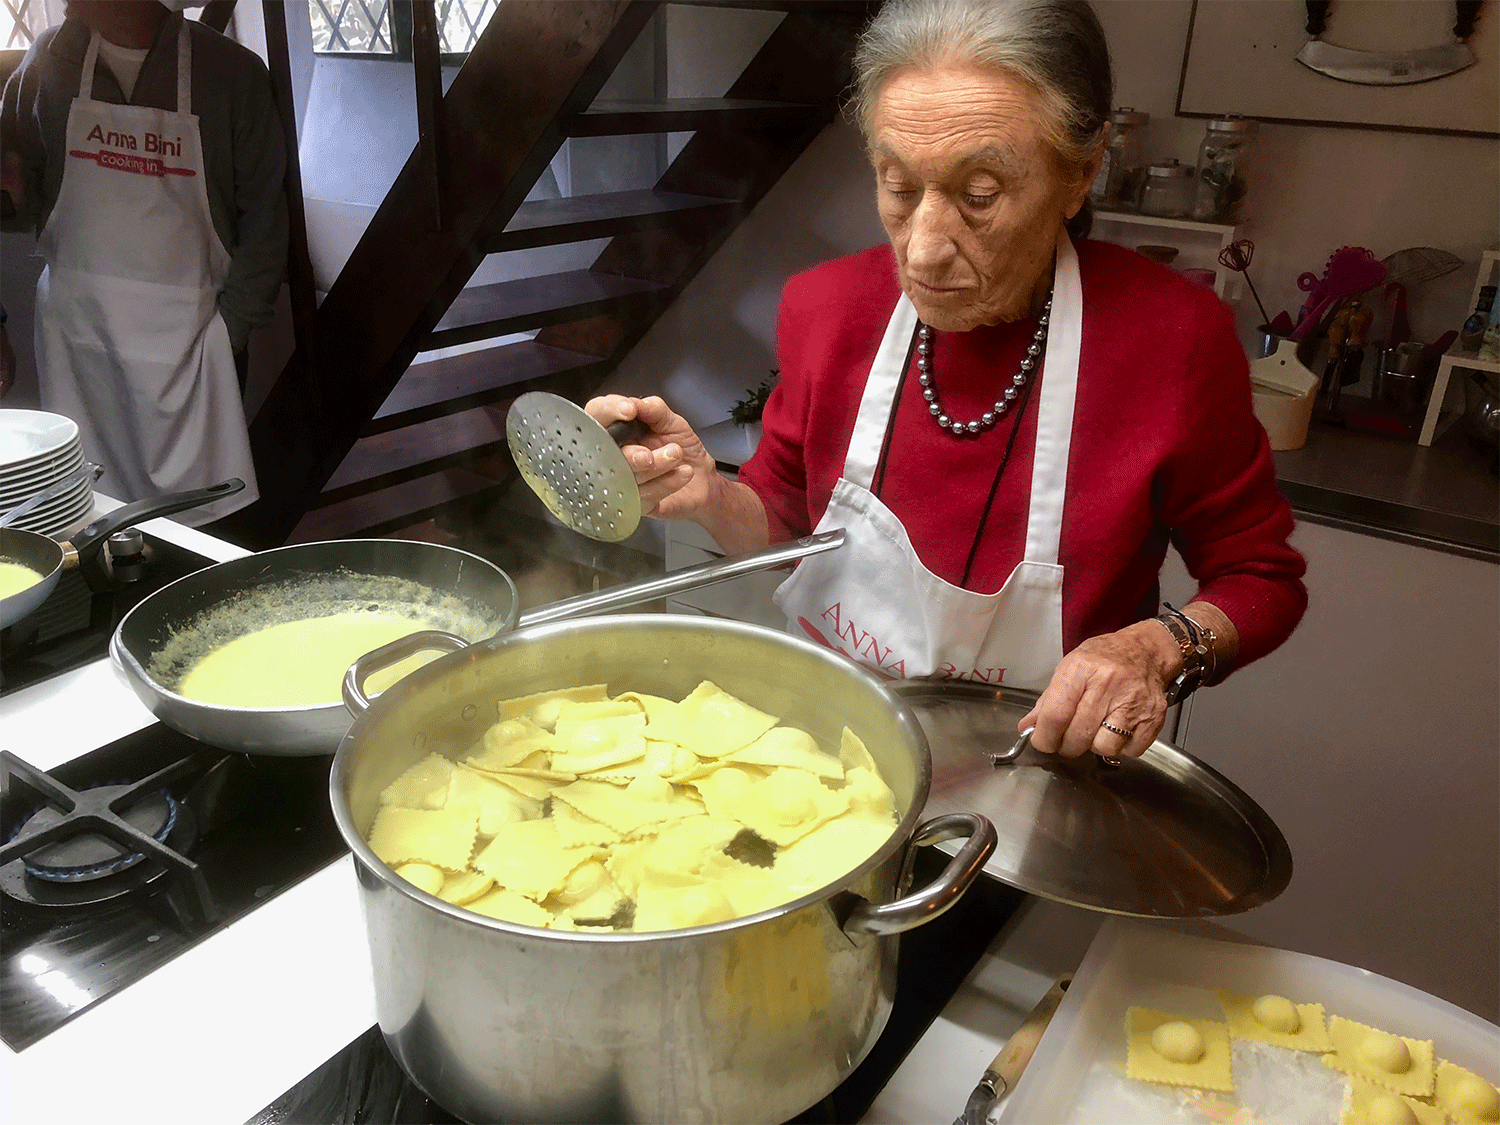 Anna Bini with pot of ravioli